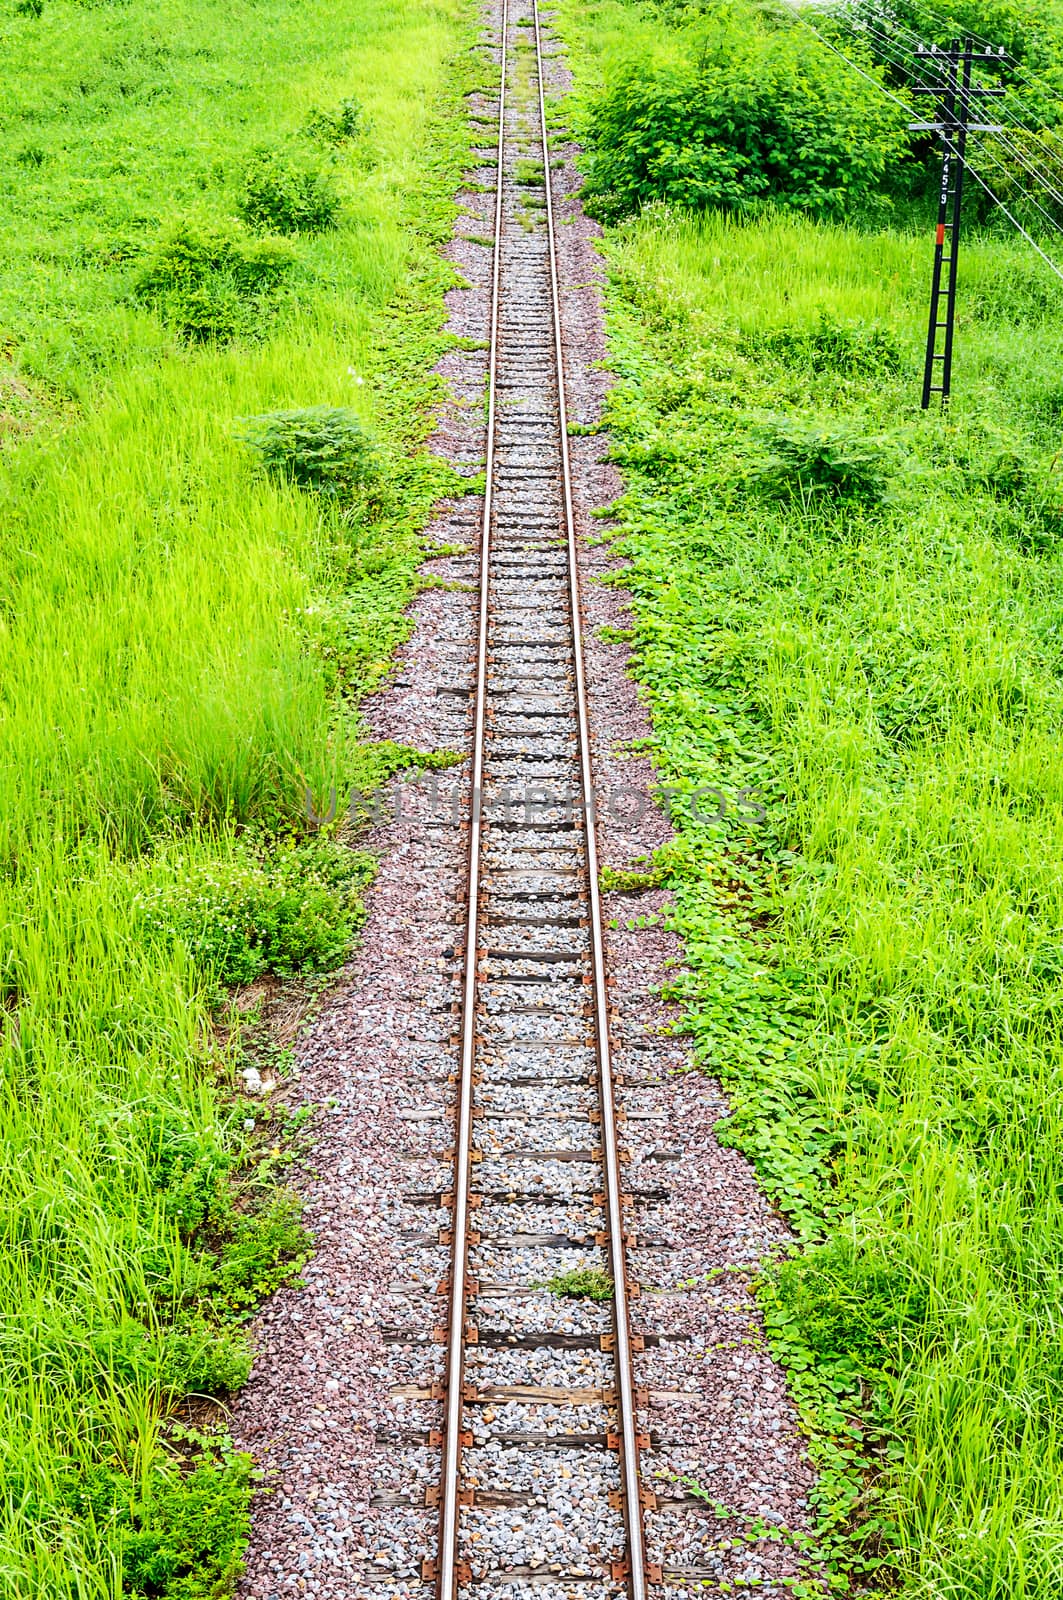 Railway tracks with wooden sleepers